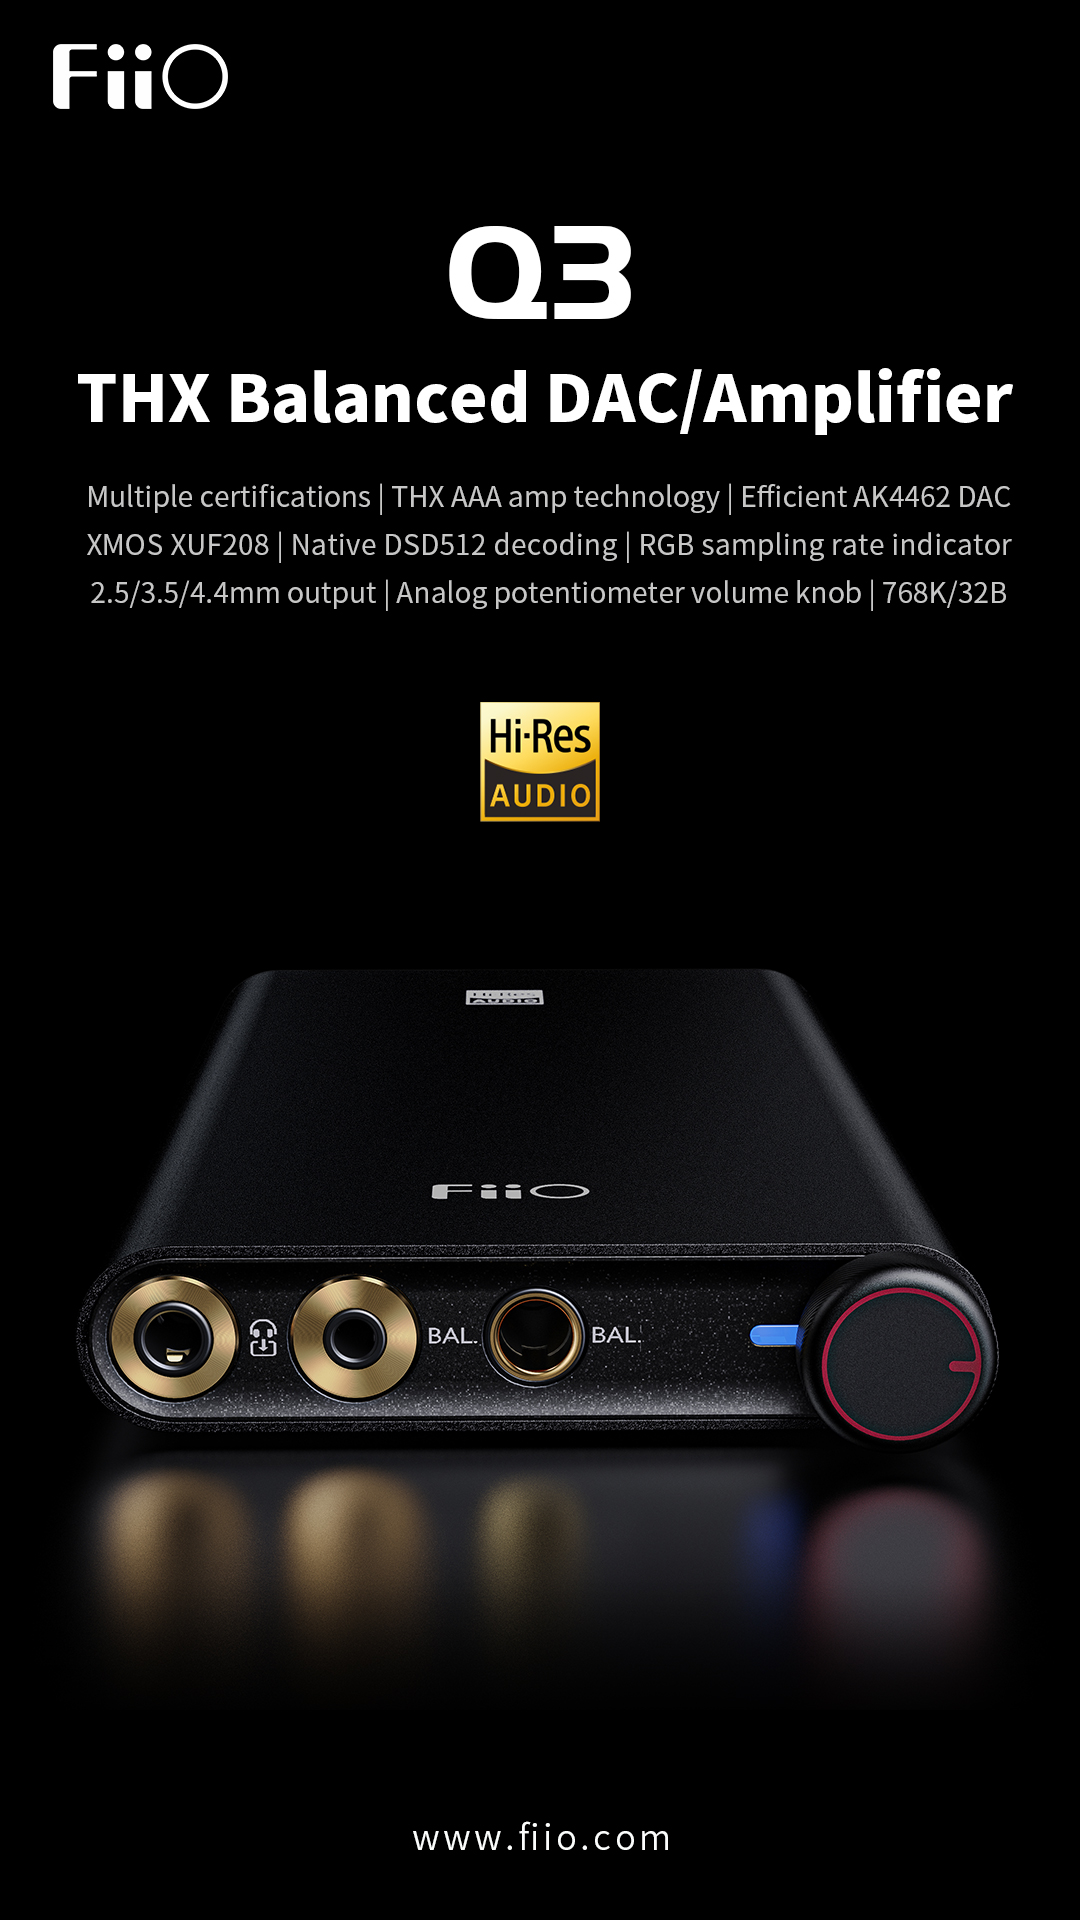 FiiO's Latest THX Balanced DAC/Amplifier - Q3 Is Now Available 